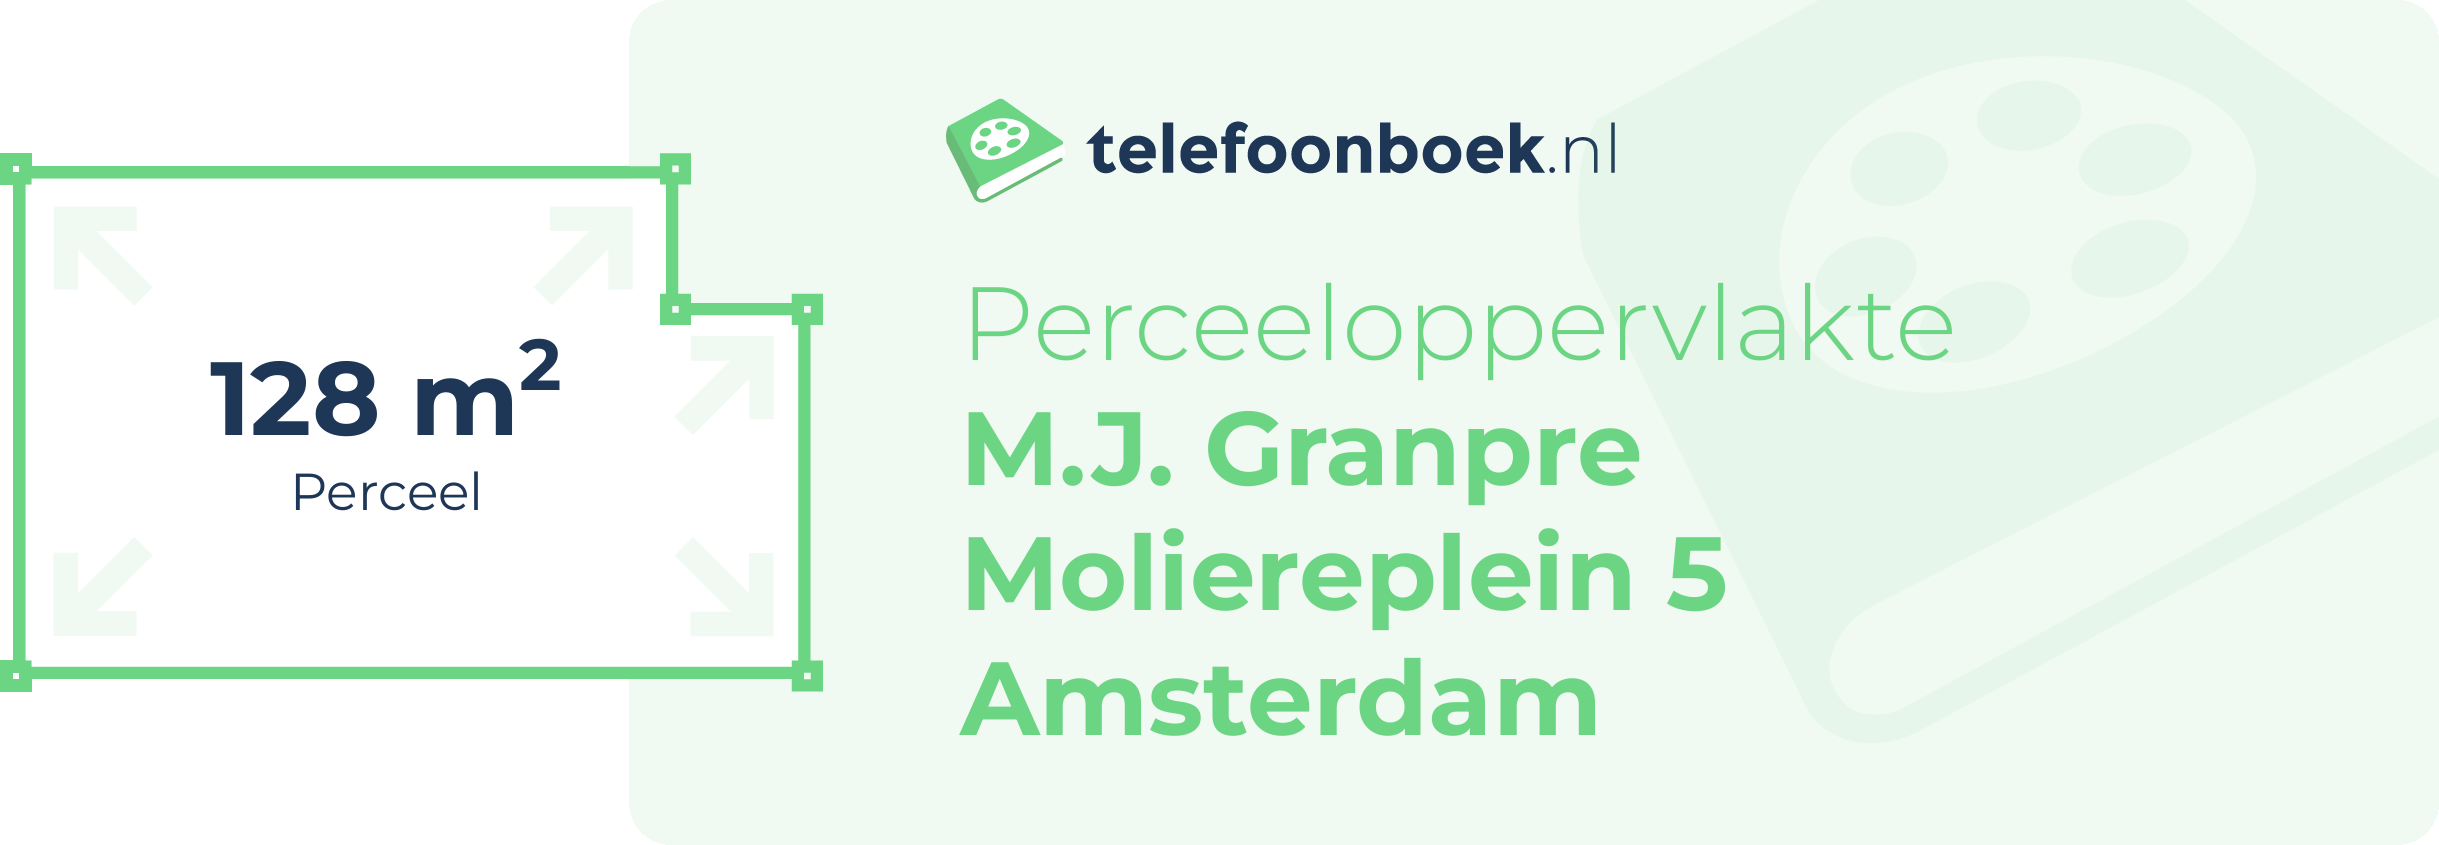 Perceeloppervlakte M.J. Granpre Moliereplein 5 Amsterdam